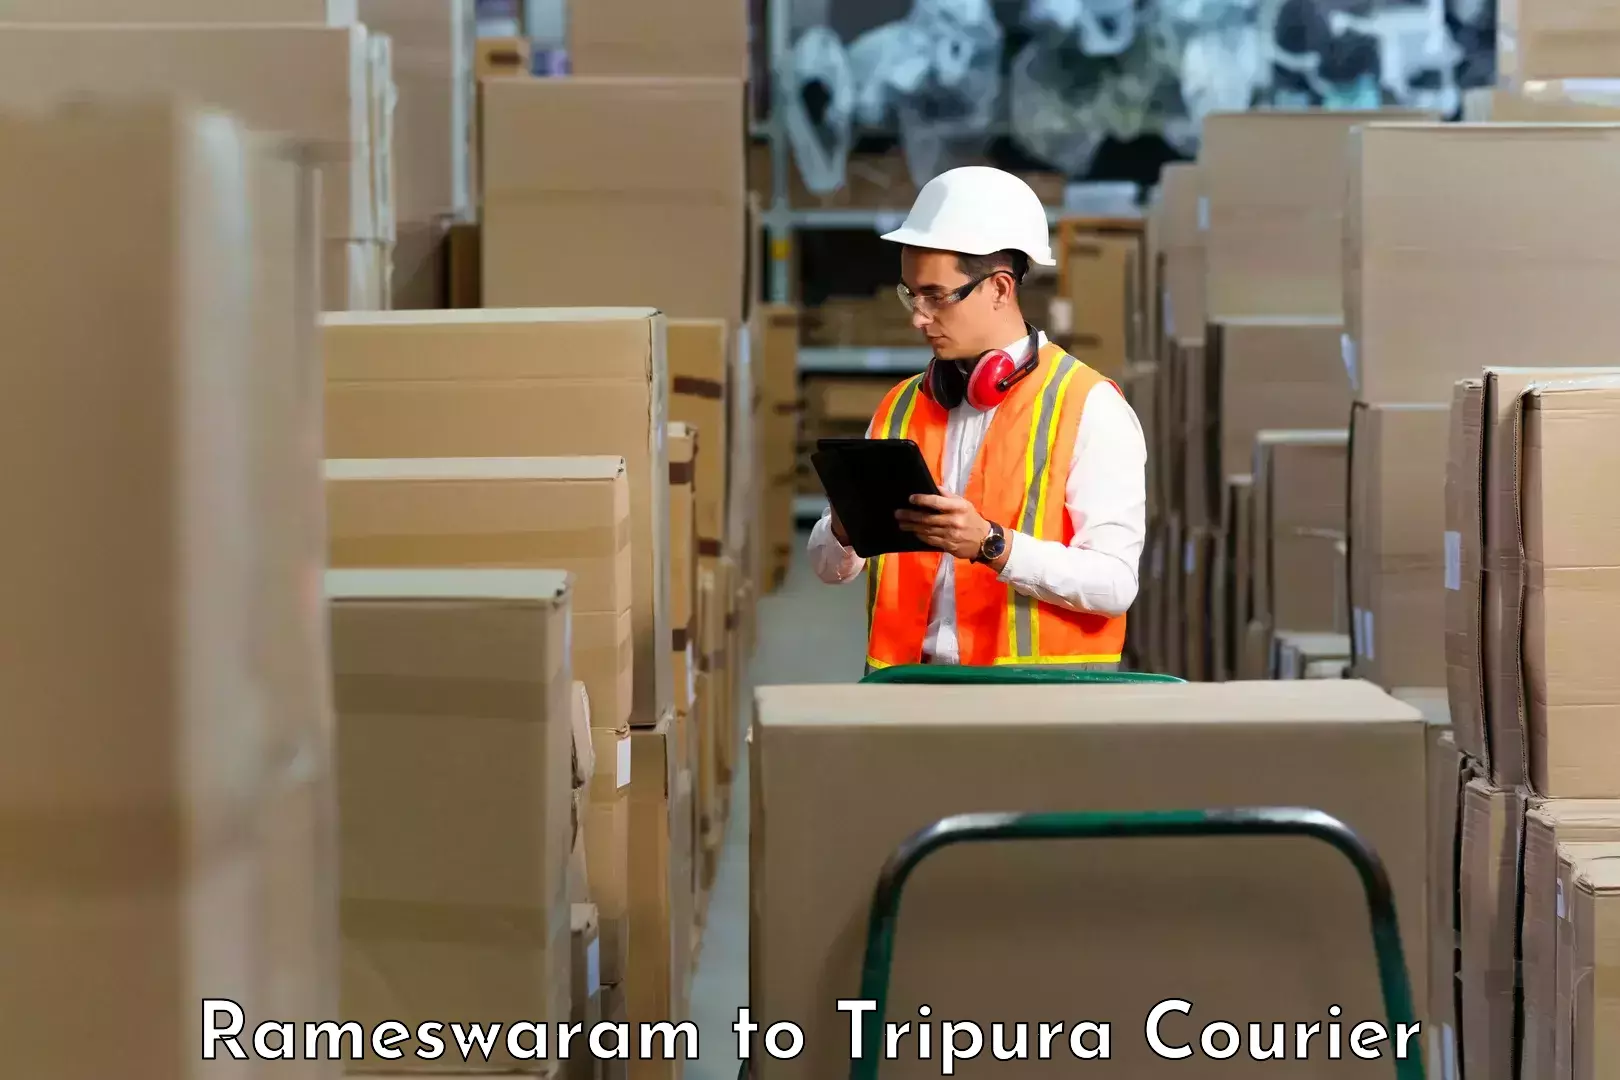 Delivery service partnership Rameswaram to Tripura